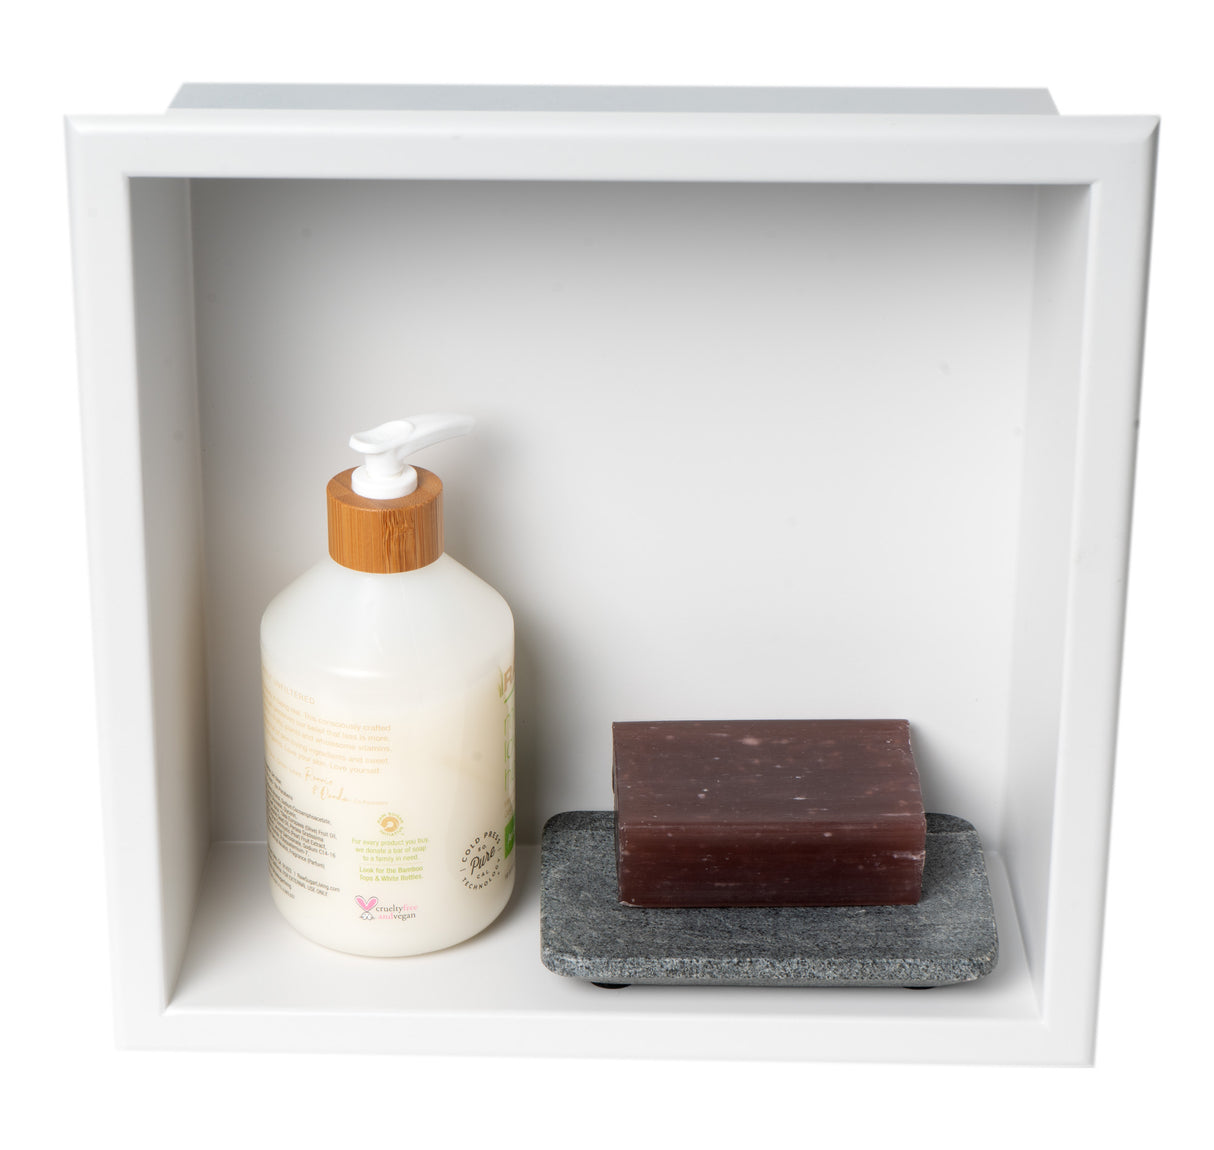 ALFI brand 12" x 12" White Matte Stainless Steel Square Single Shelf Bath Shower Niche